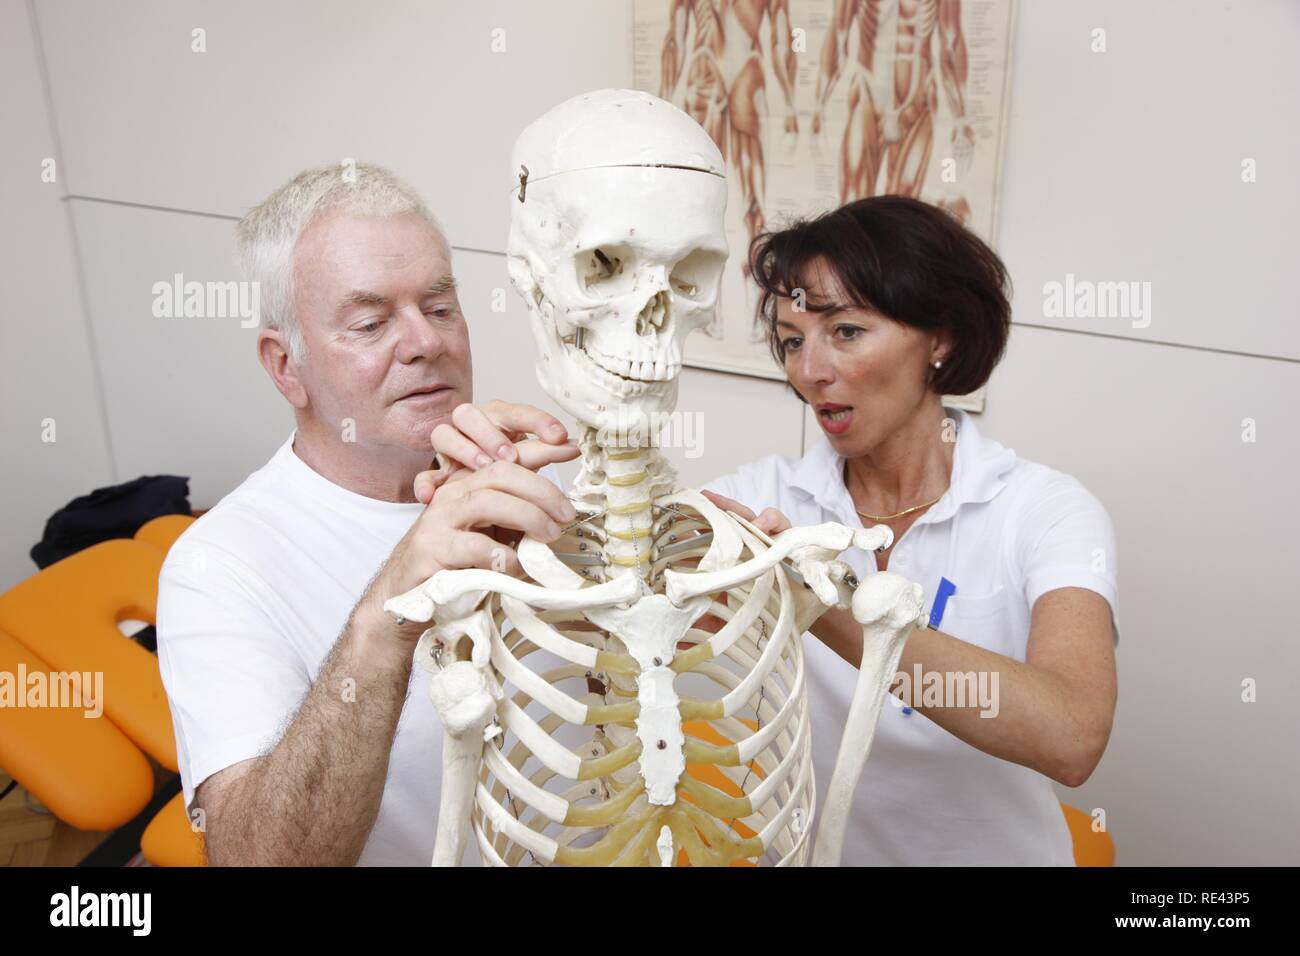 Terapeuta explicando a un paciente la base anatómica para terapia física, basada en un esqueleto, un departamento de fisioterapia Foto de stock